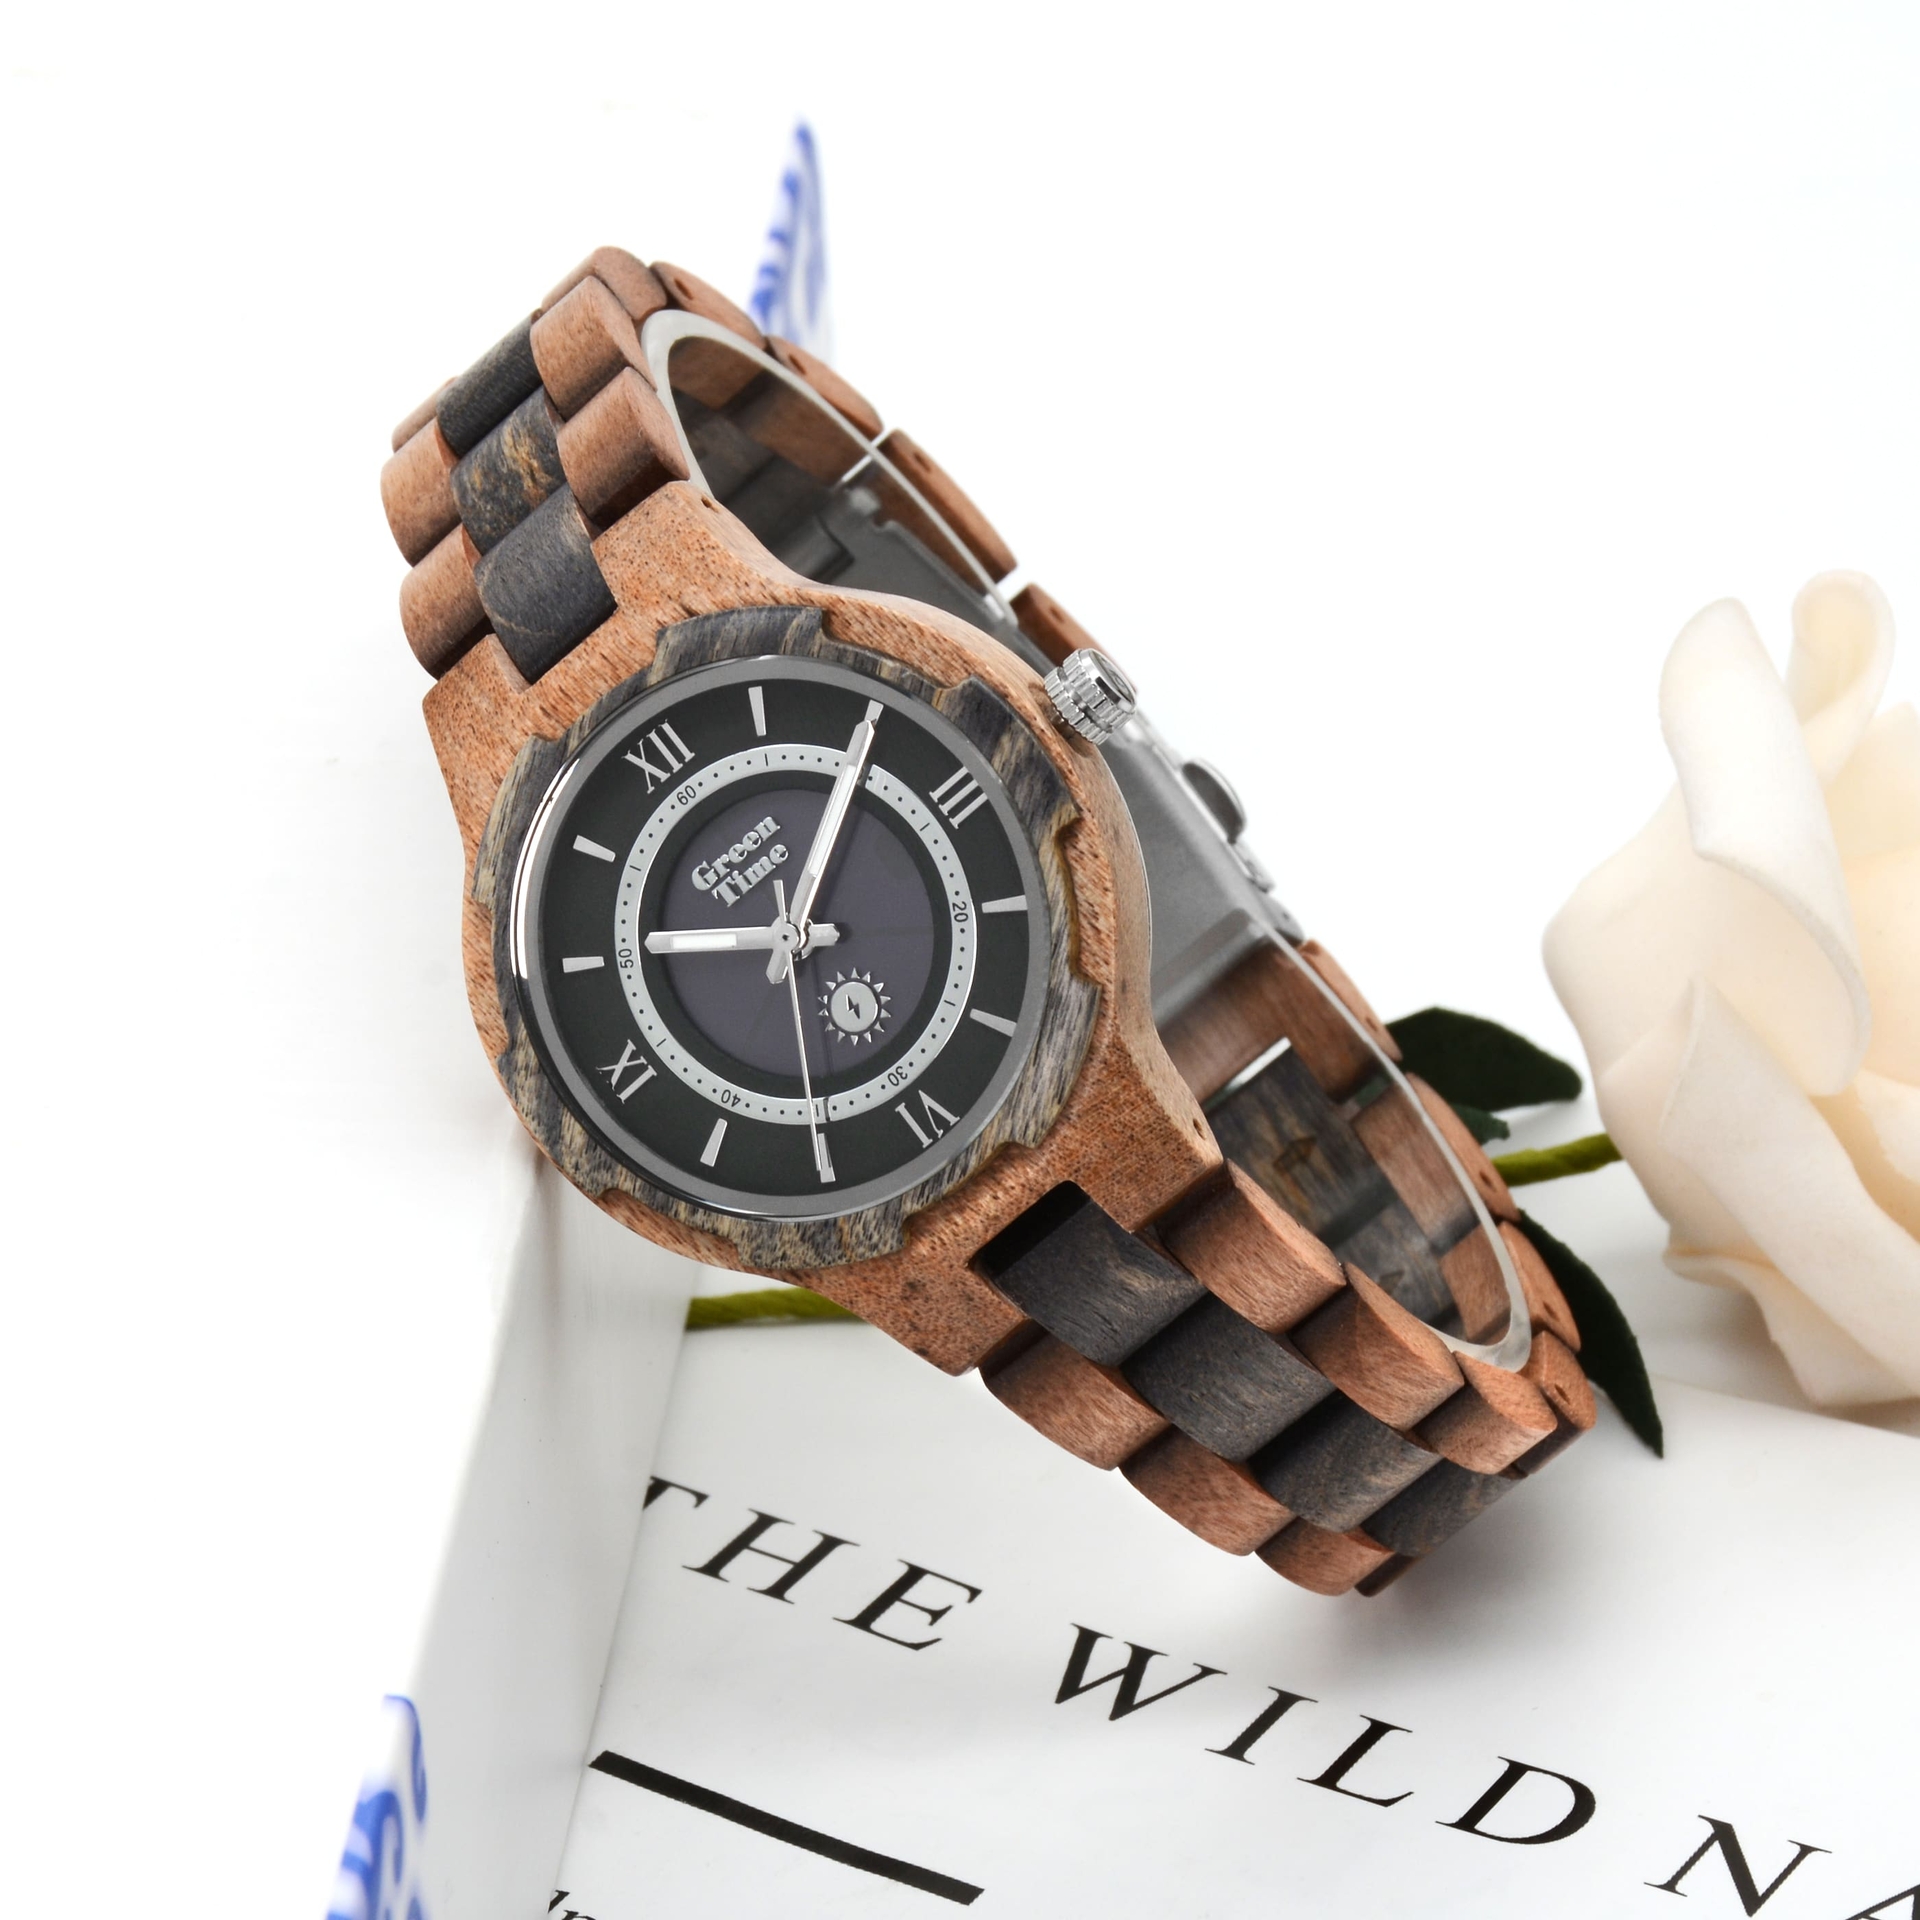 Wooden GreenTime solar watch - Greentime wood watch